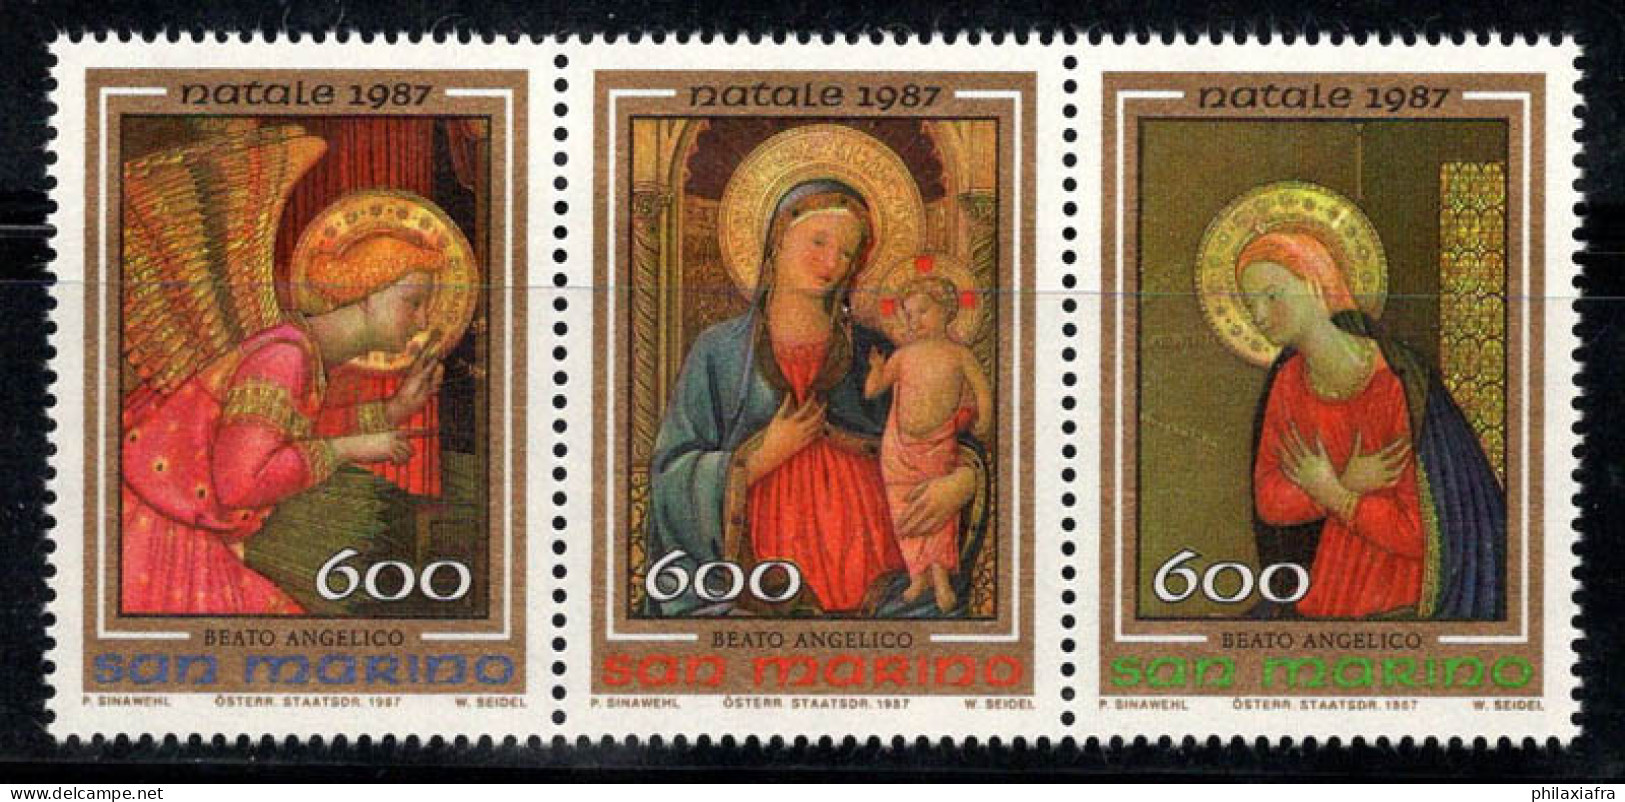 Saint-Marin 1987 Sass. 1218-1220 Neuf ** 100% Religion - Unused Stamps